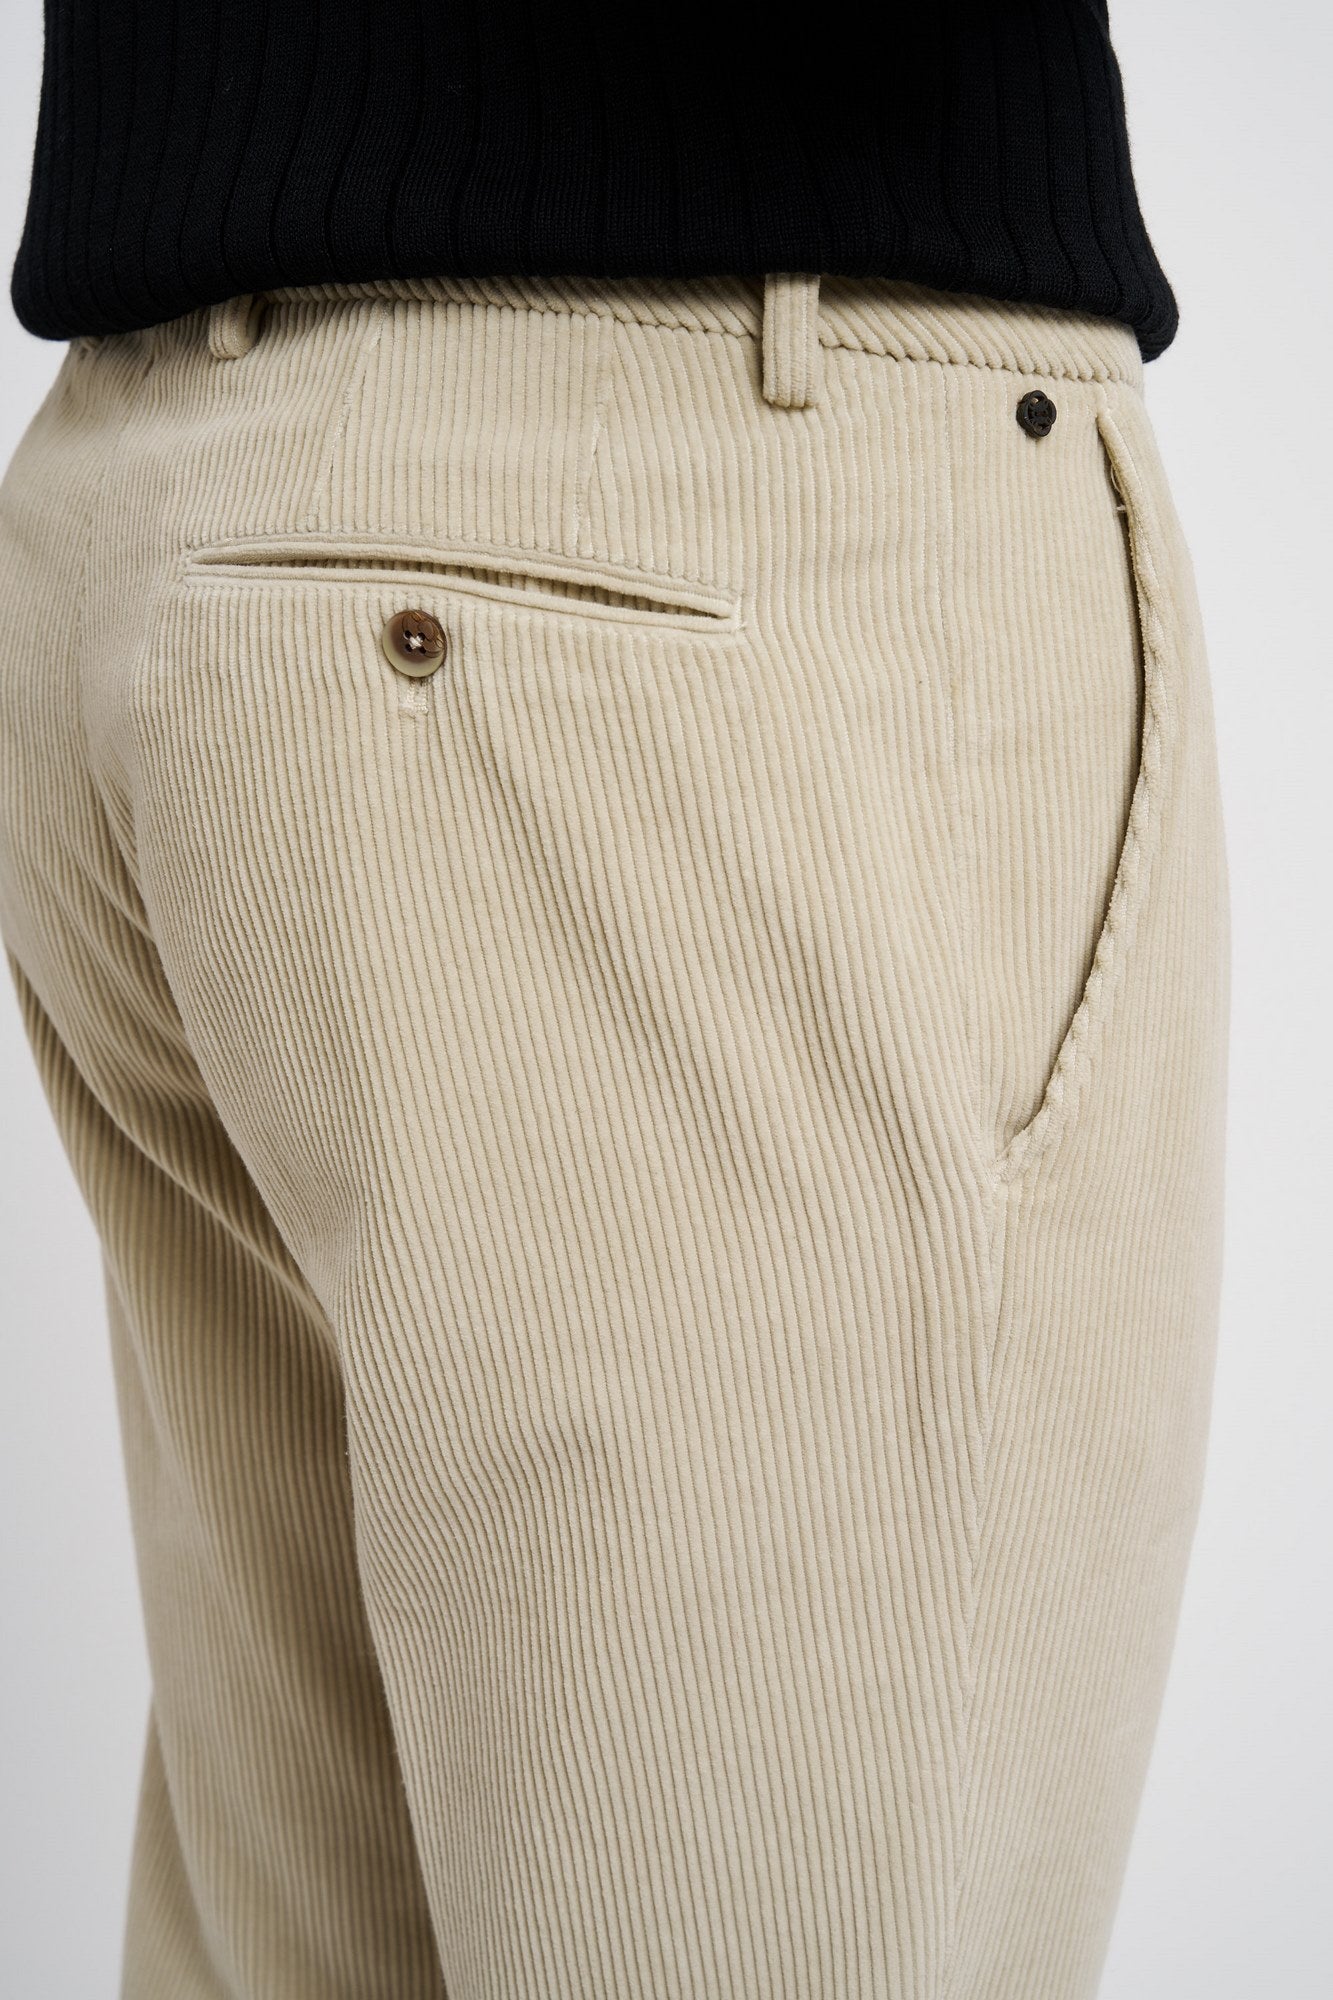 GTA Trousers Riccardo 100% Cotton Beige-5